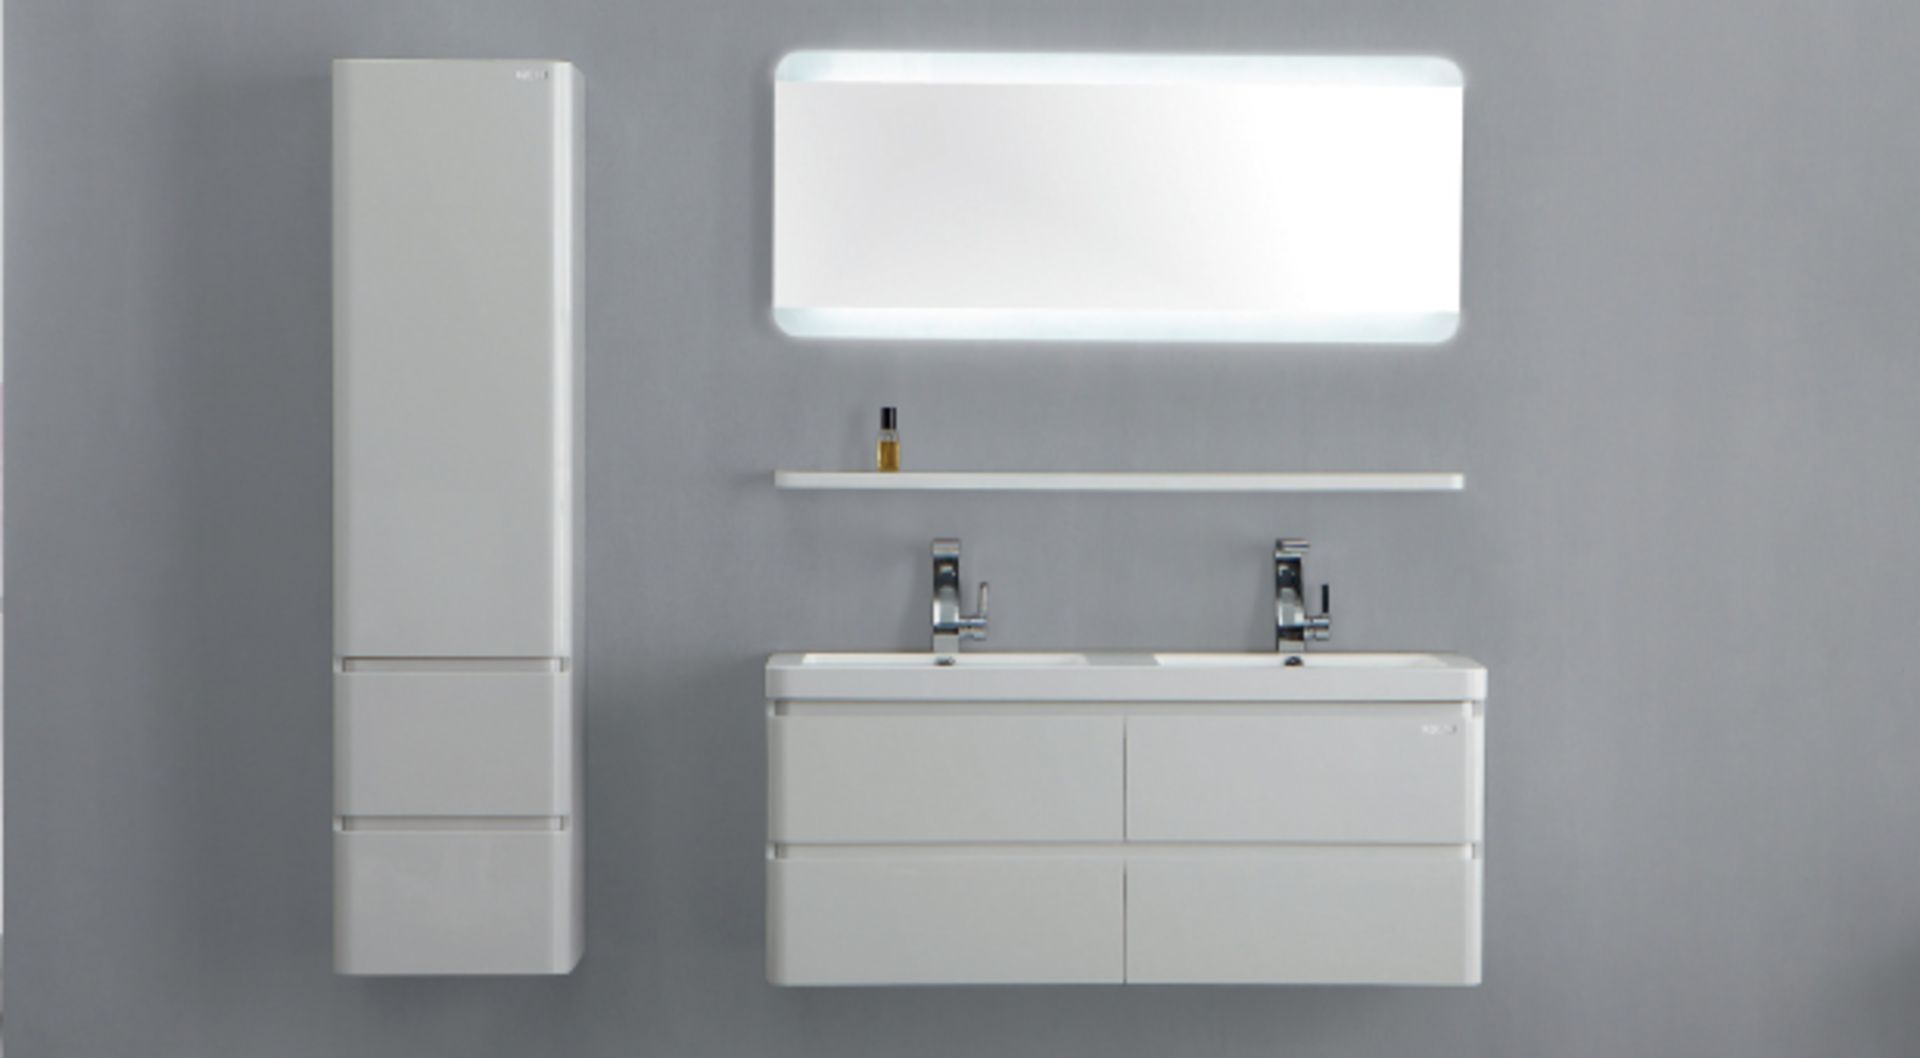 1 x Stylish Bathroom Edge Back-lit Mirror 60 - A-Grade - Ref:AMR11-060 - CL170 - Location: Nottingha